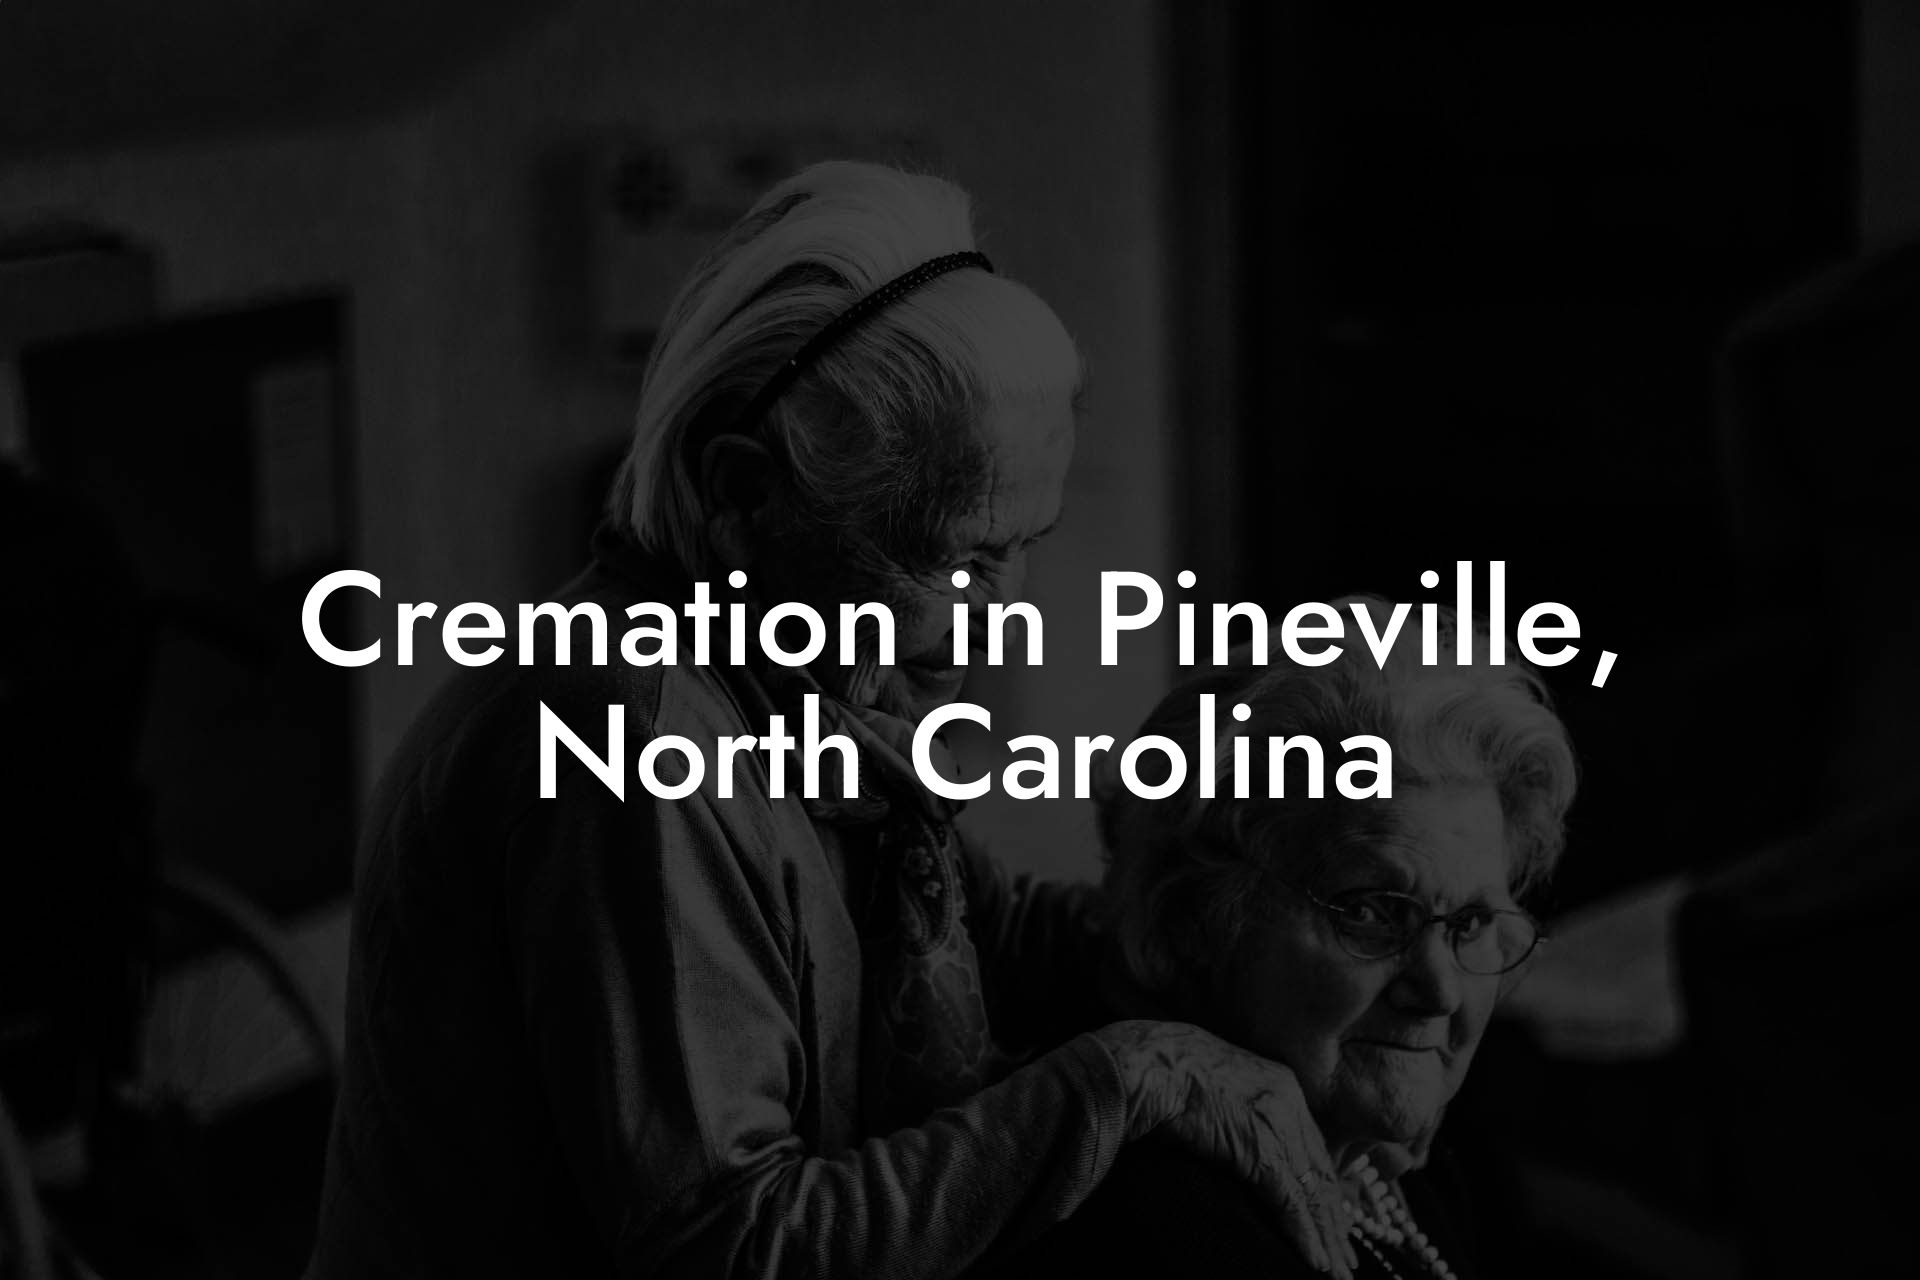 Cremation in Pineville, North Carolina